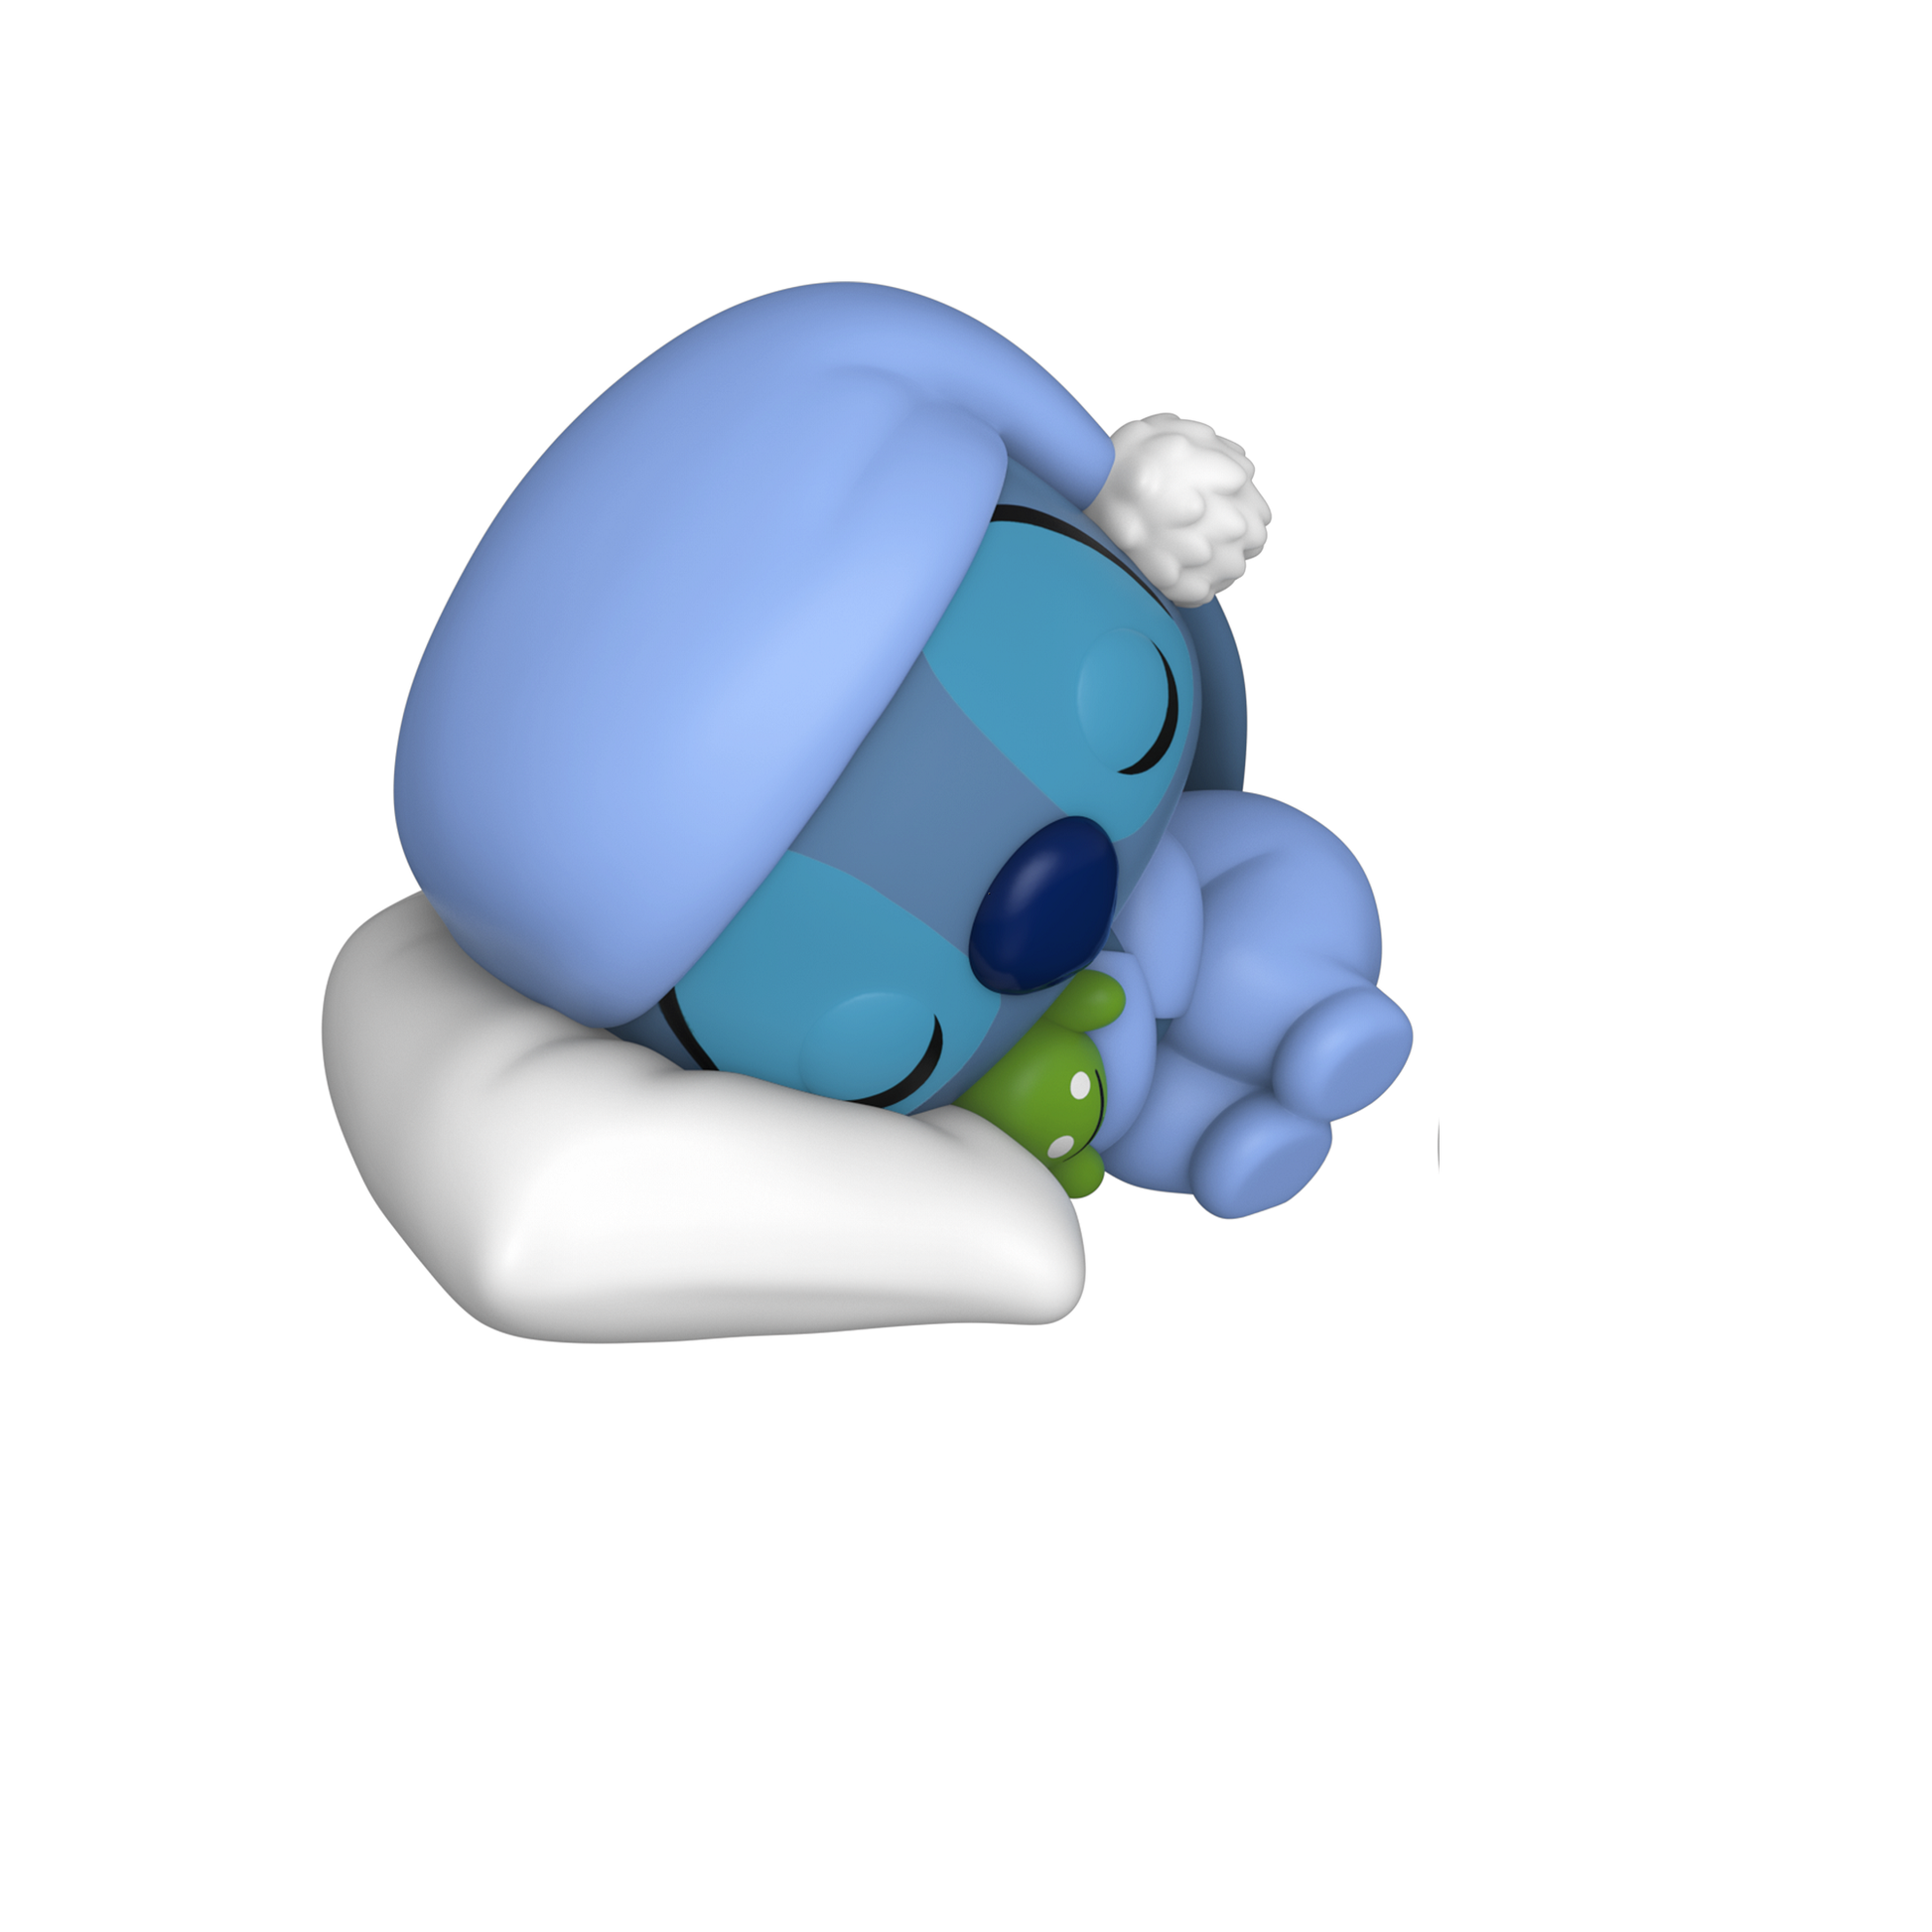 Funko Plush Lilo & Stitch: Sleeping Stitch Doll - Special Edition